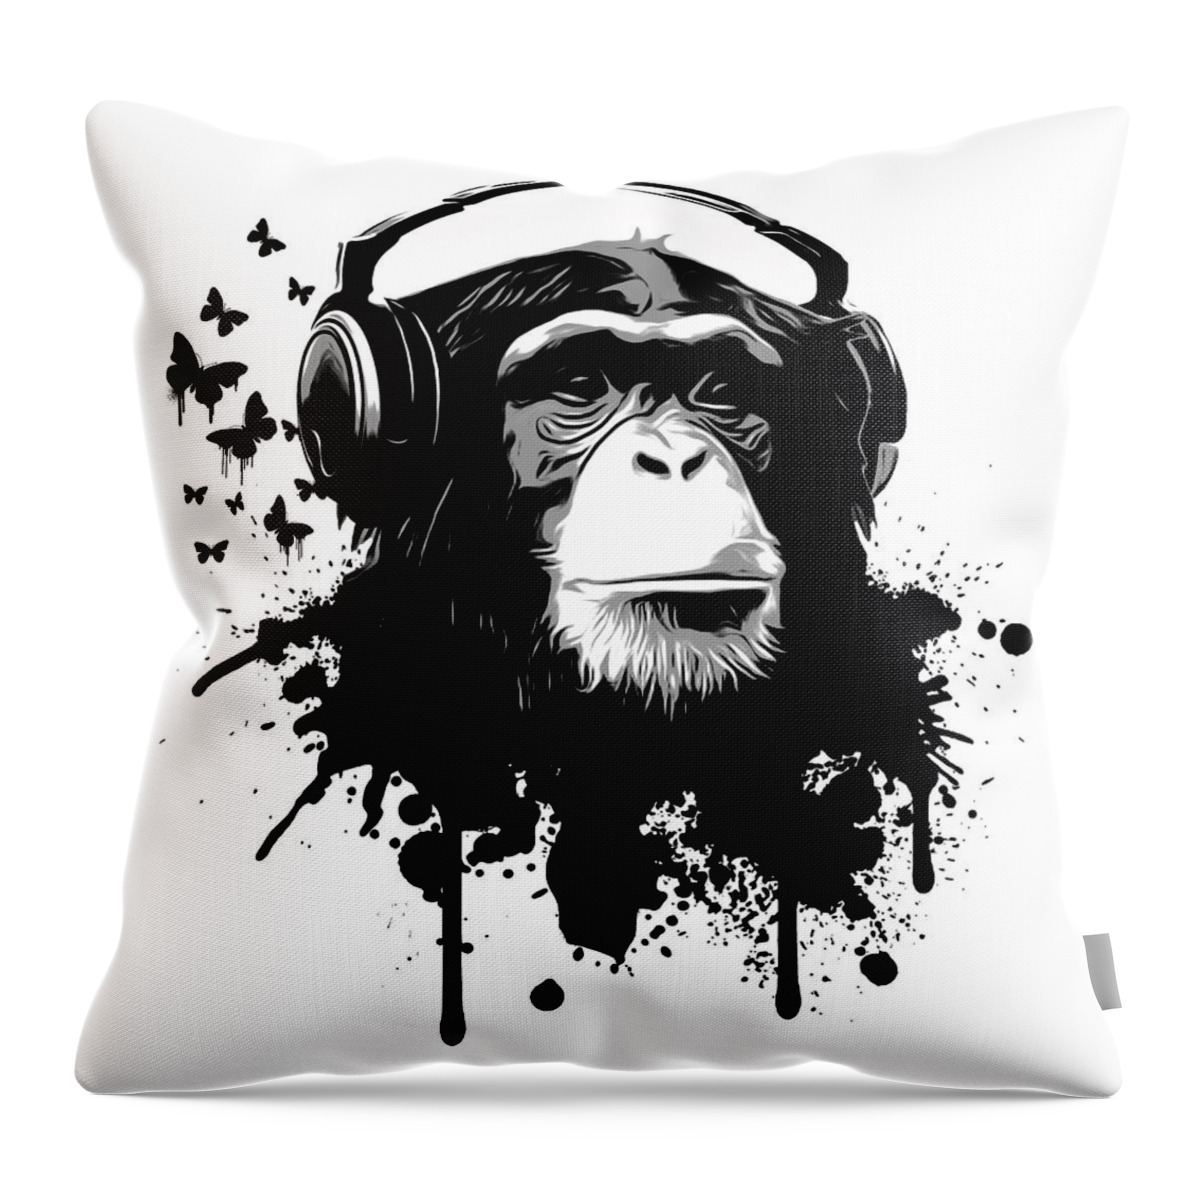 Ape Throw Pillow featuring the digital art Monkey Business by Nicklas Gustafsson